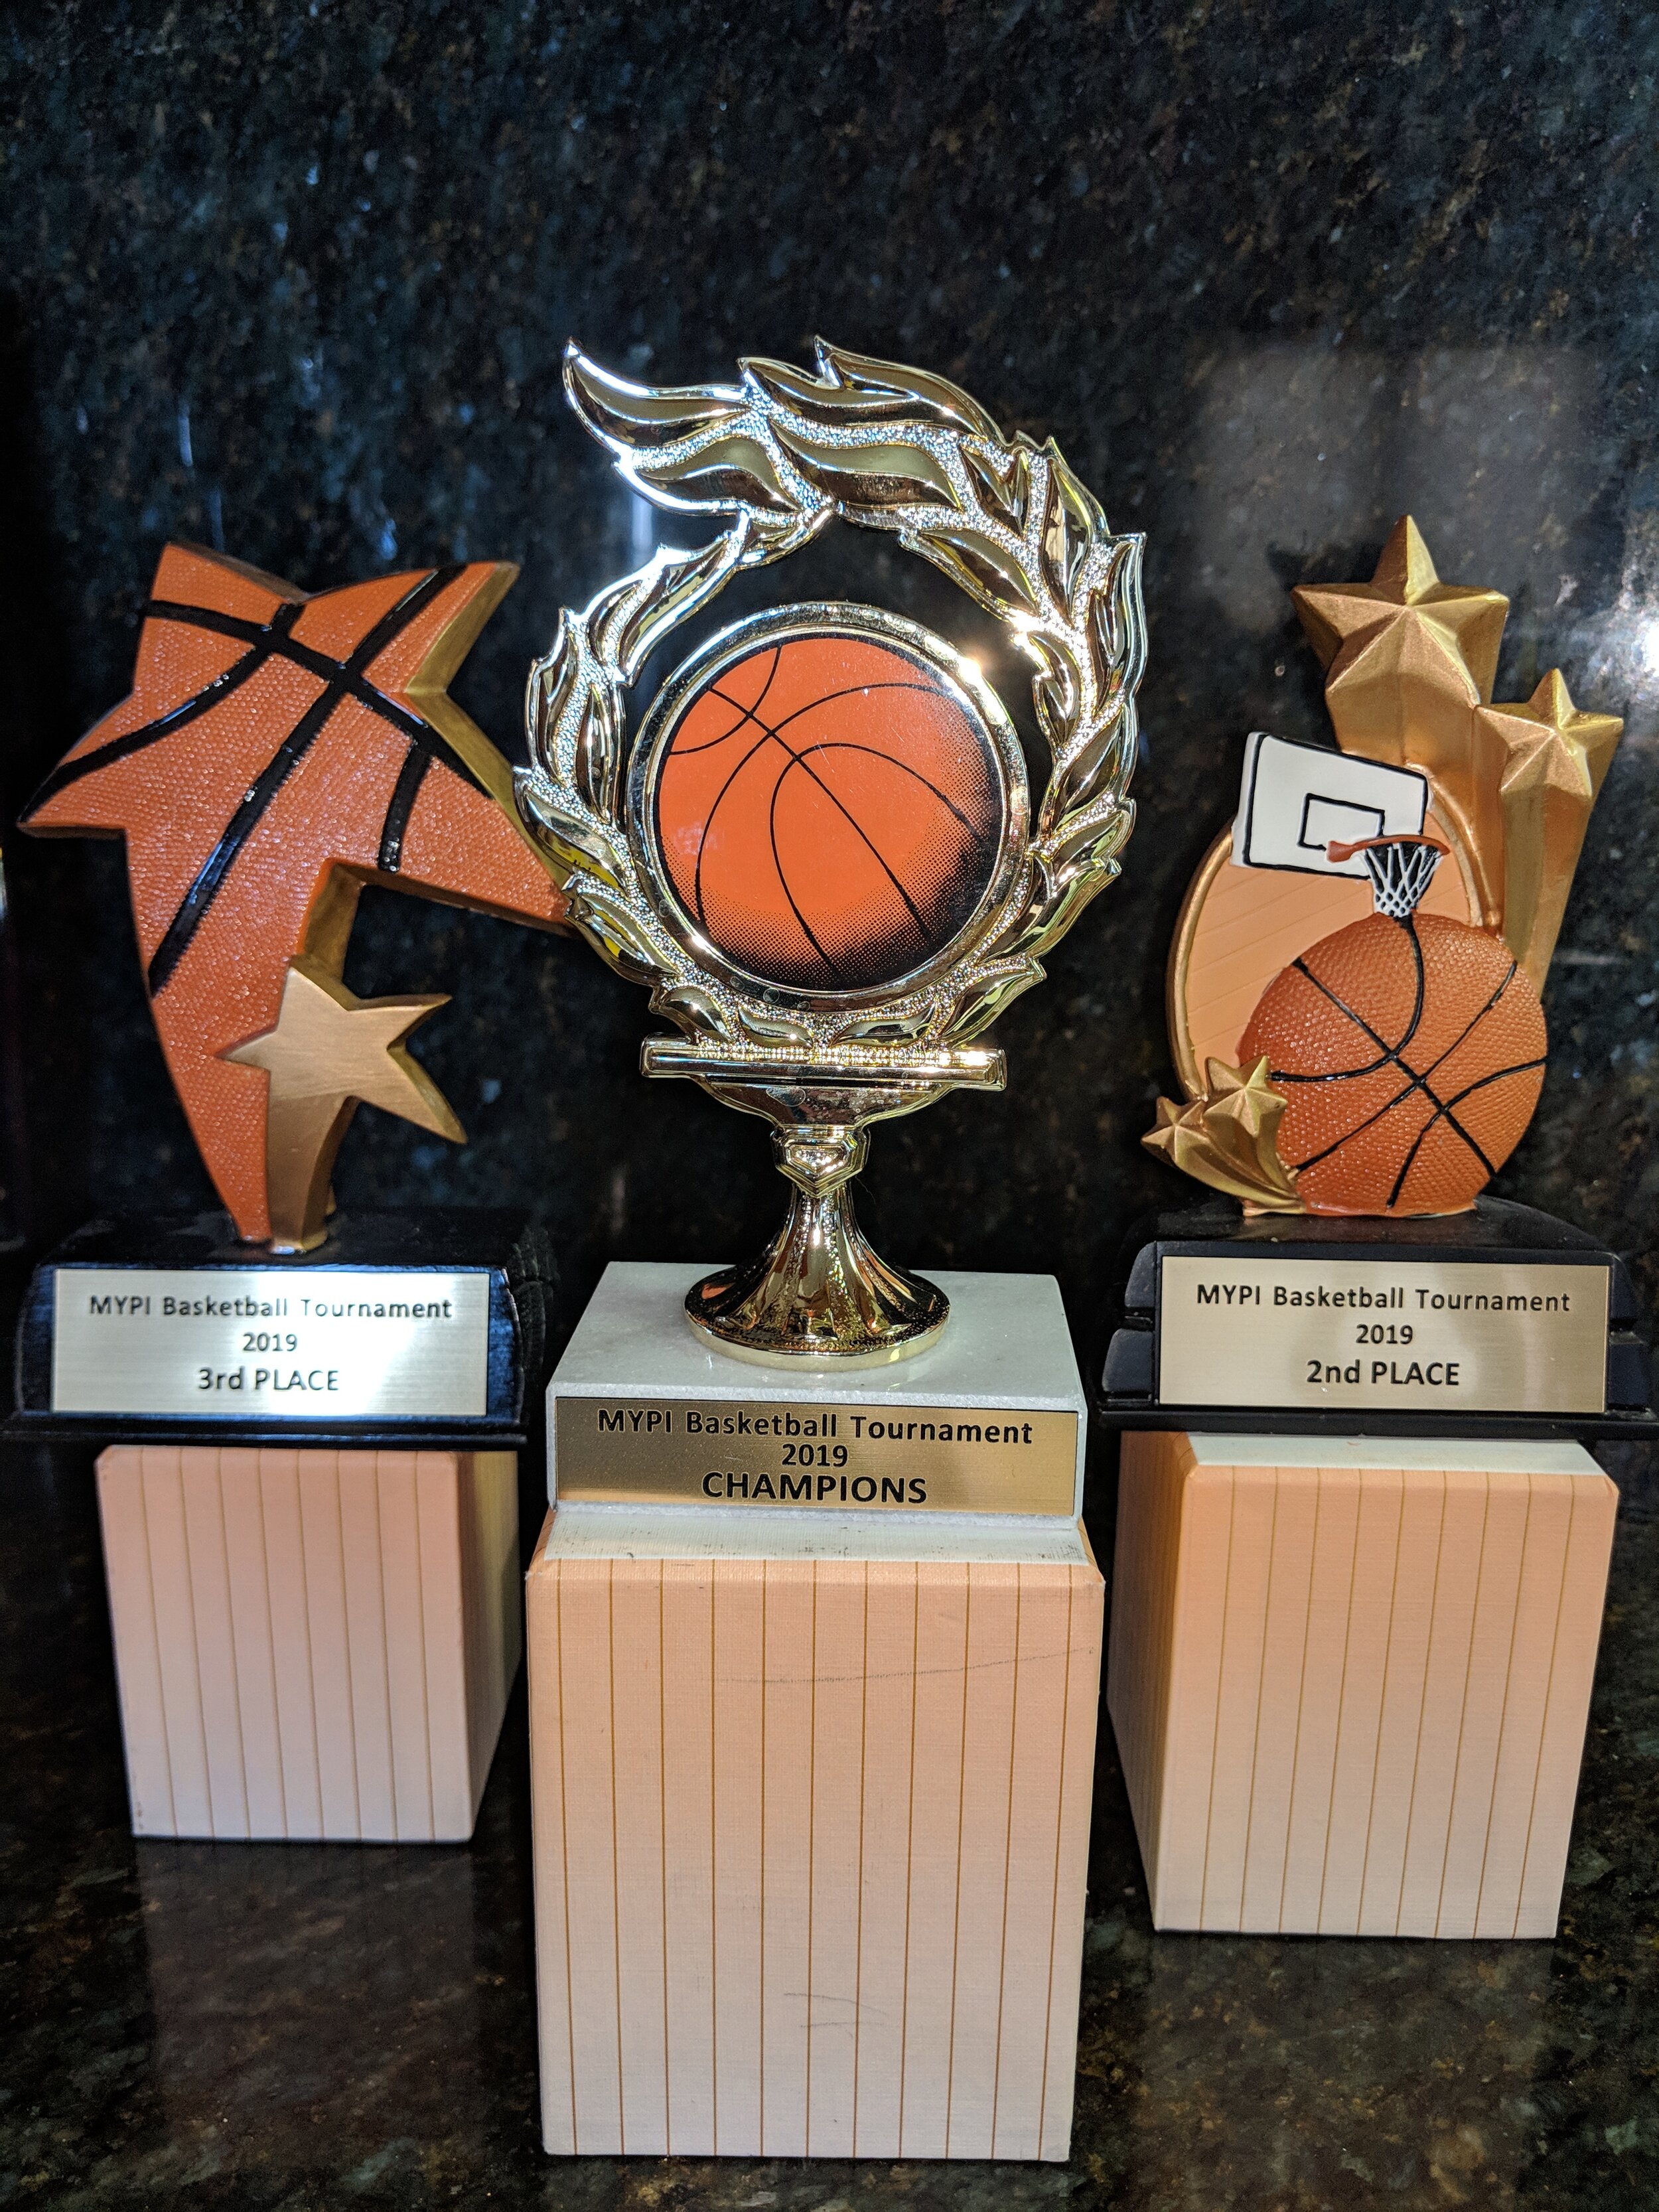 Basketball Tournament 2019 Trophies.jpg